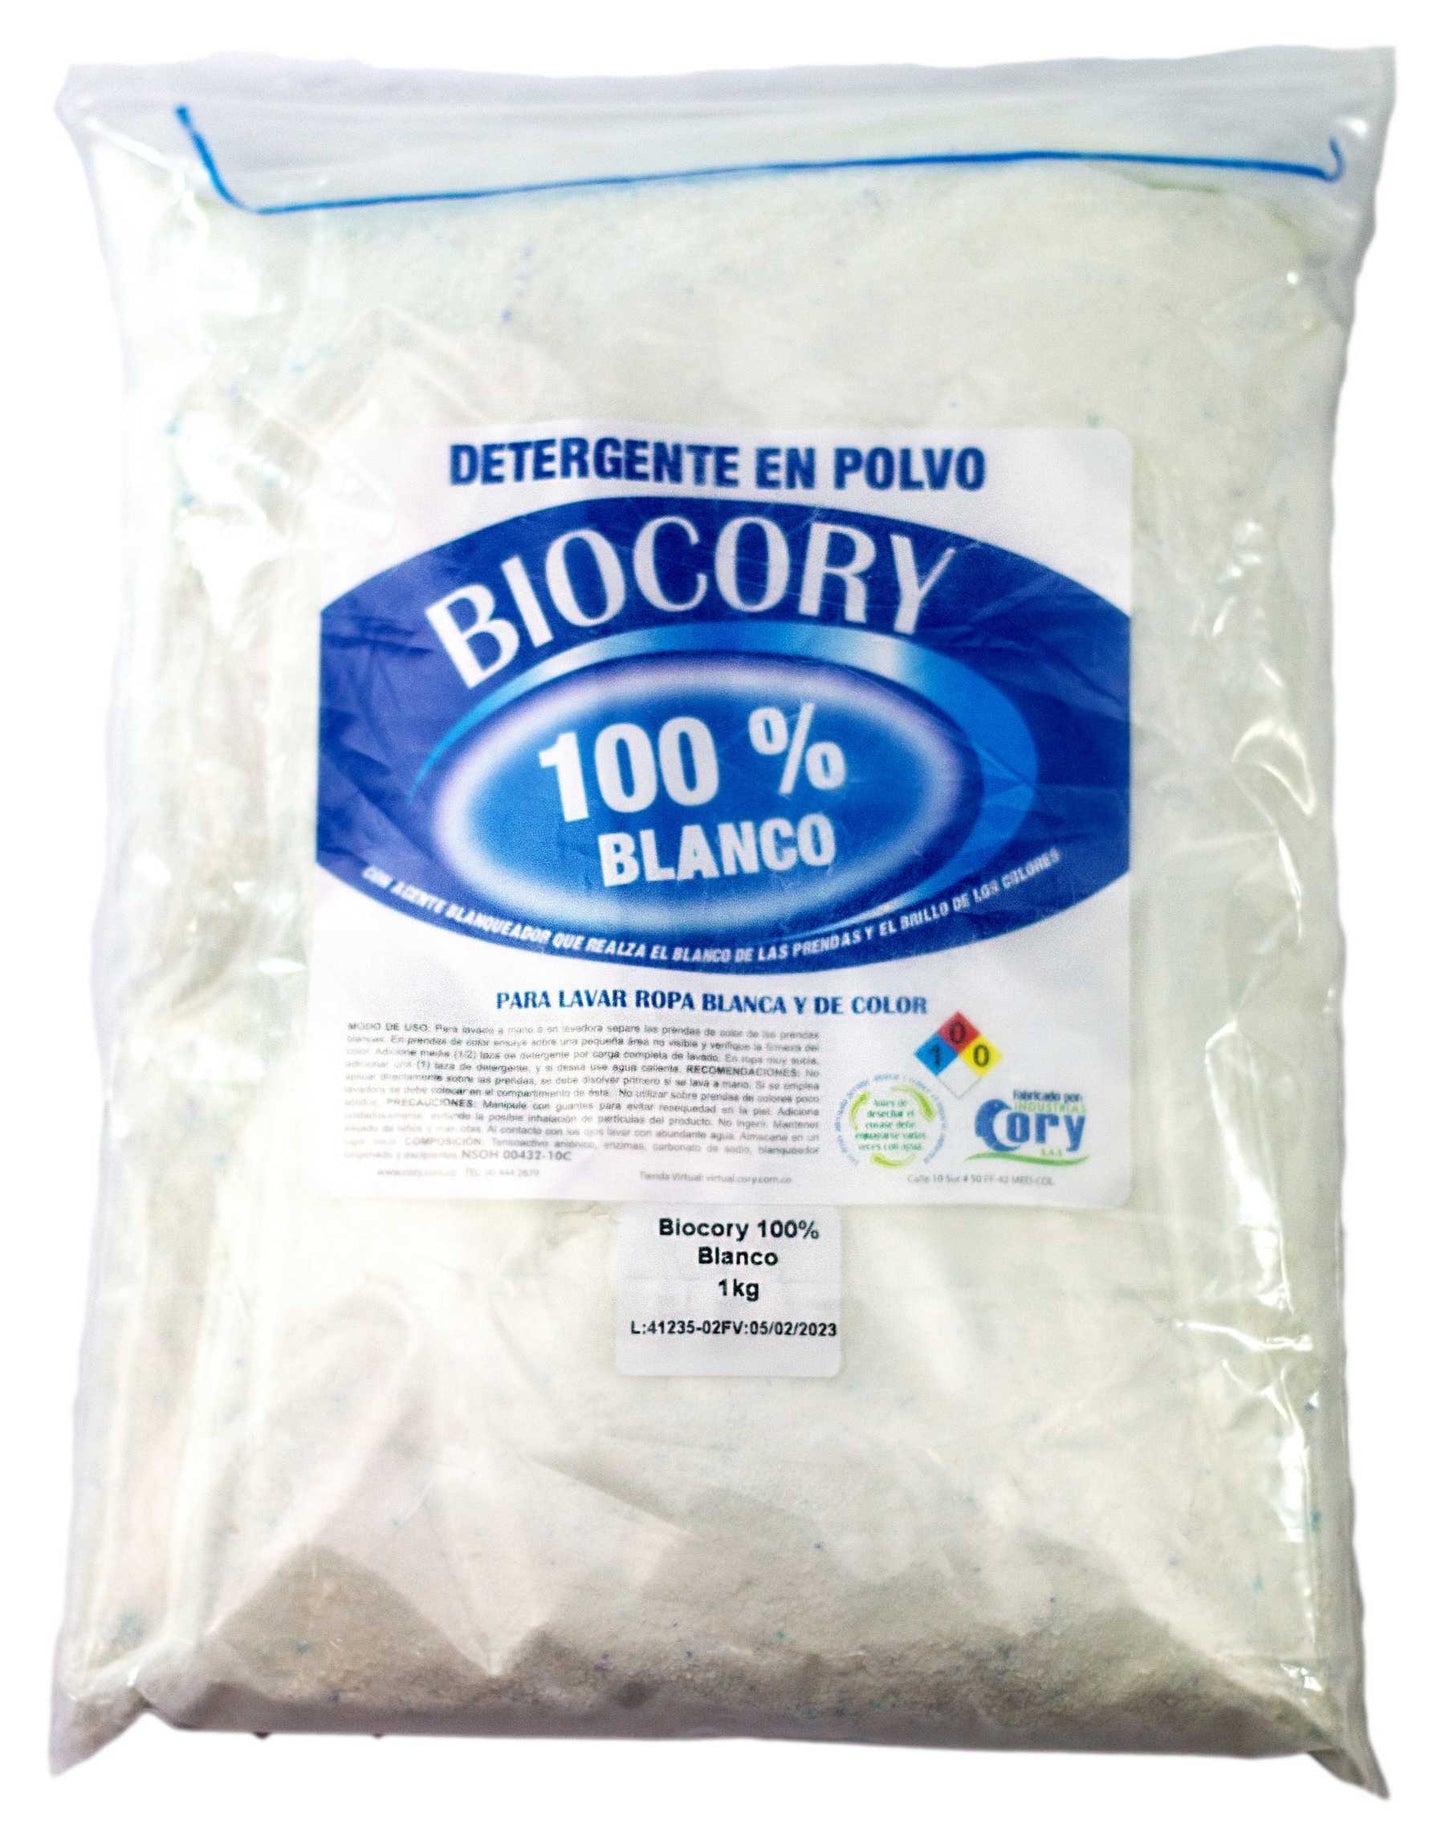 Detergente en polvo Biocory 100%